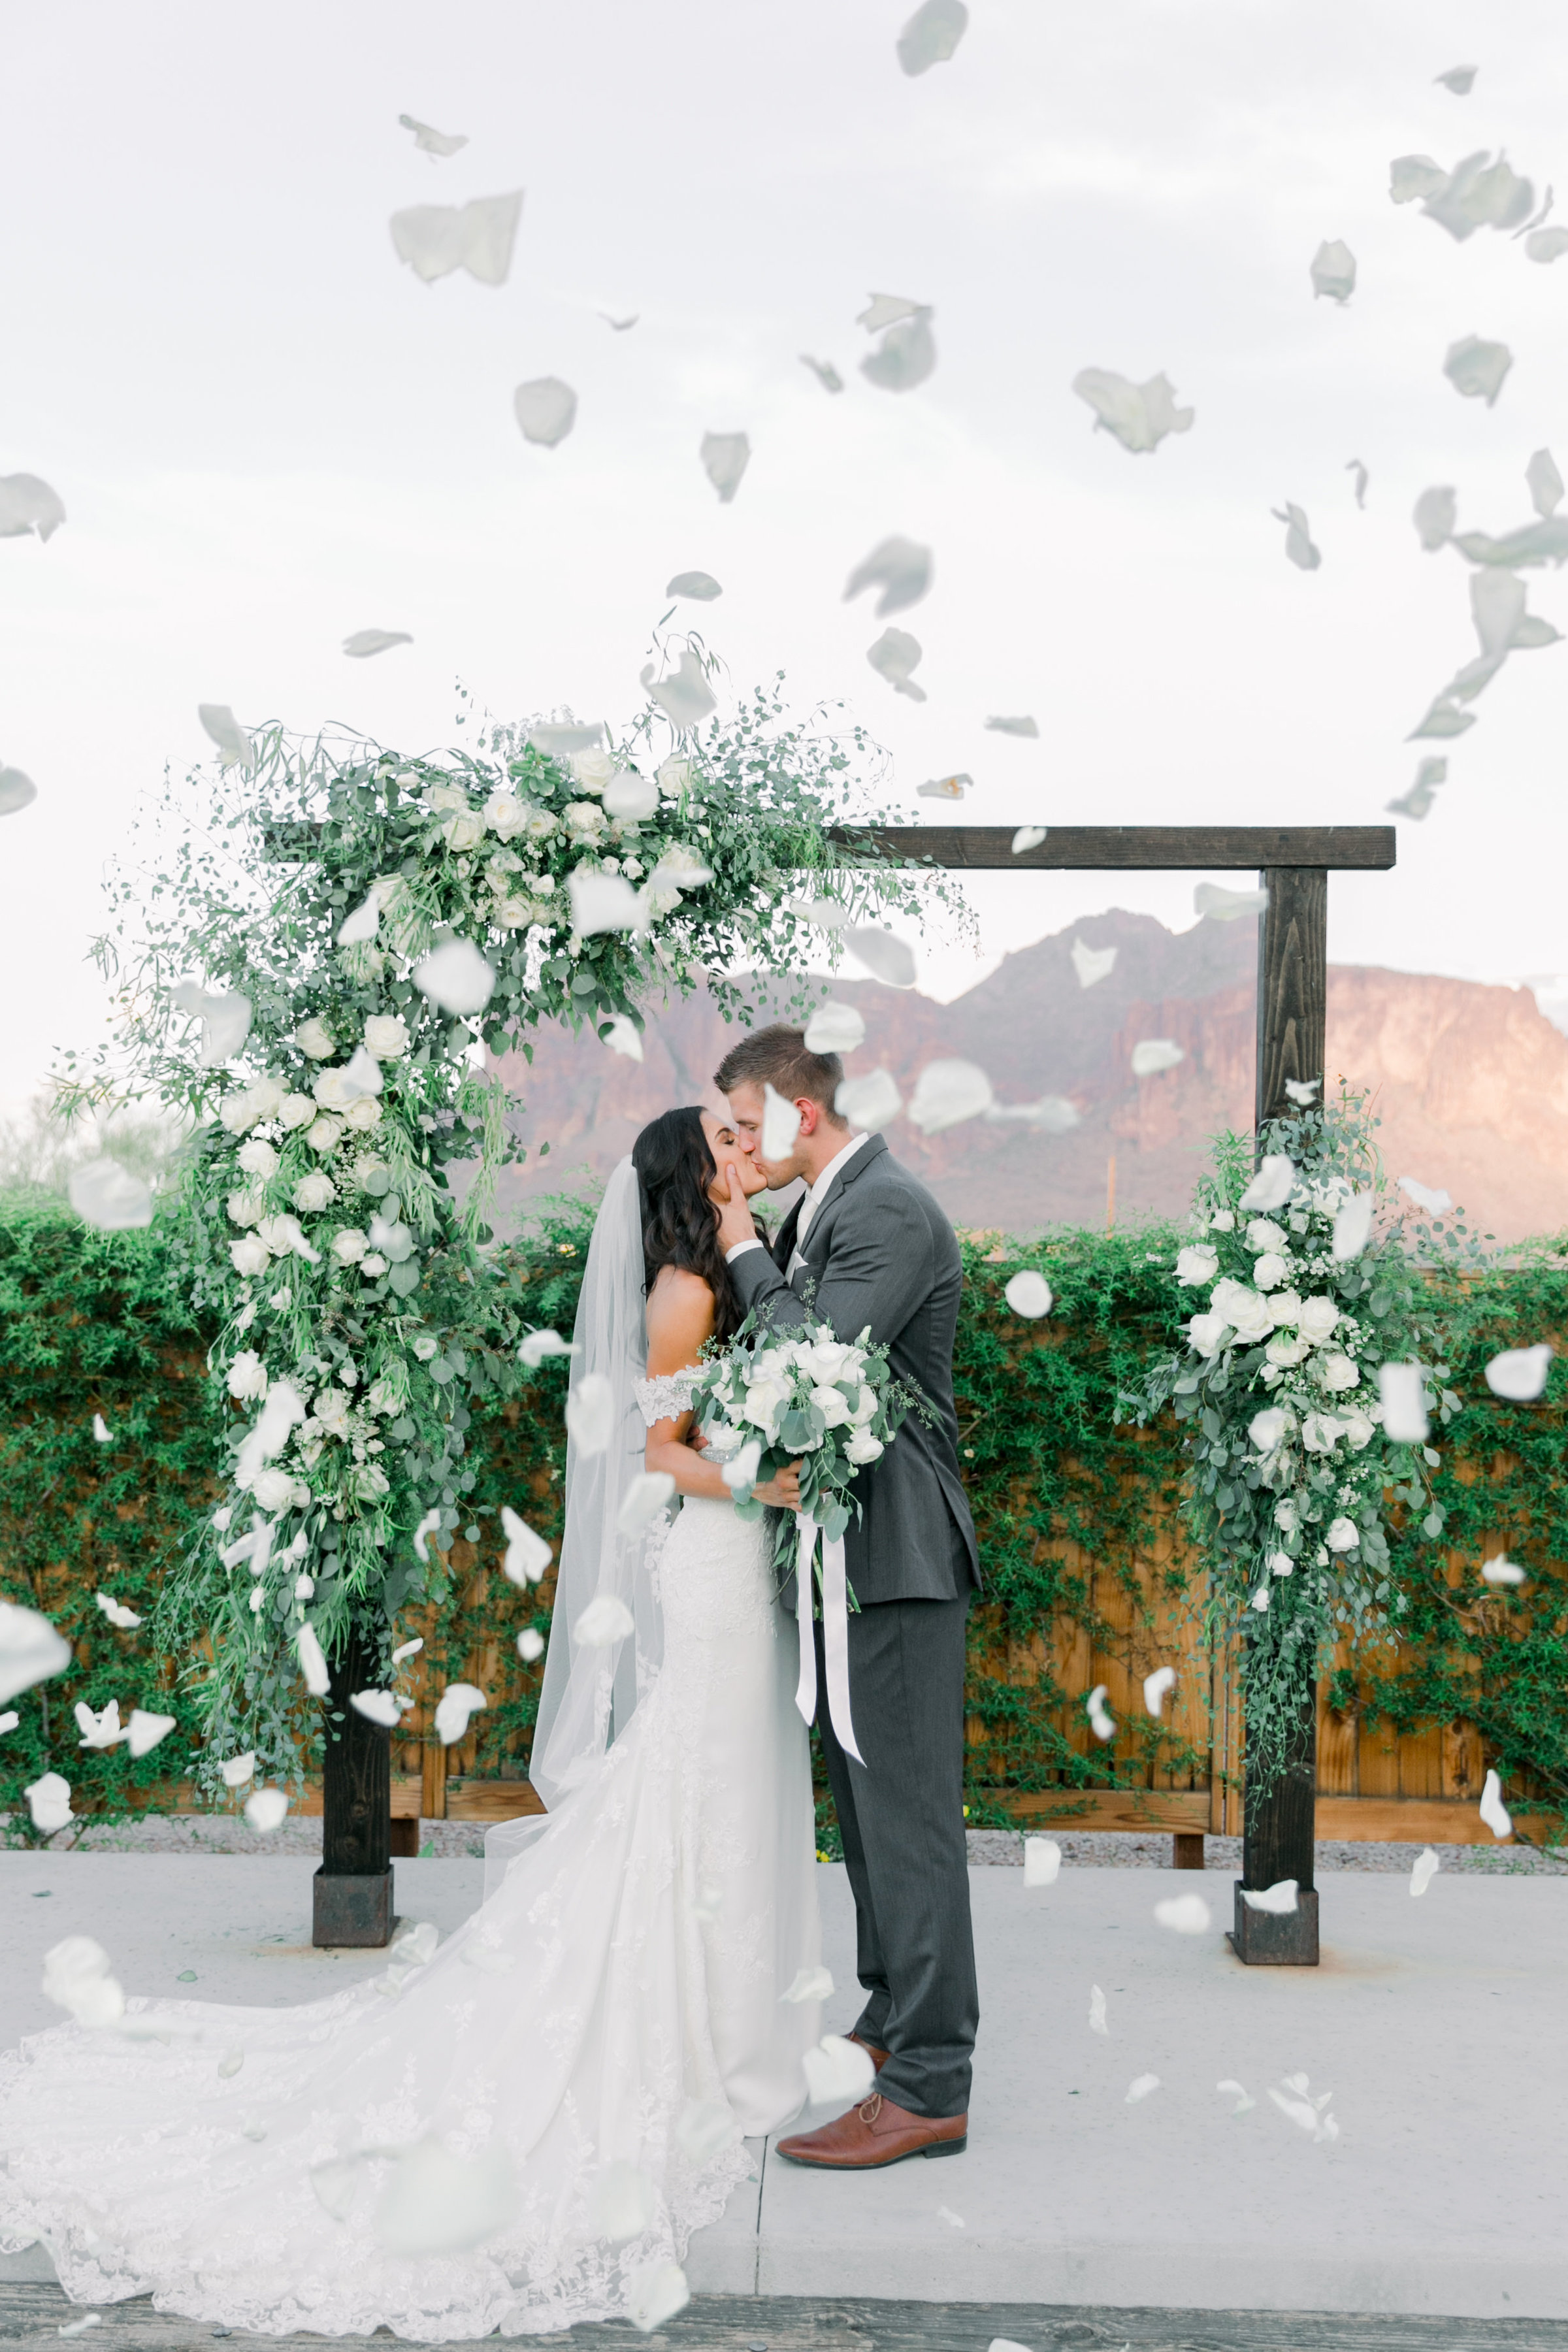 Karlie Colleen Photography - The Paseo Venue - Arizona Wedding - Jackie & Ryan-10